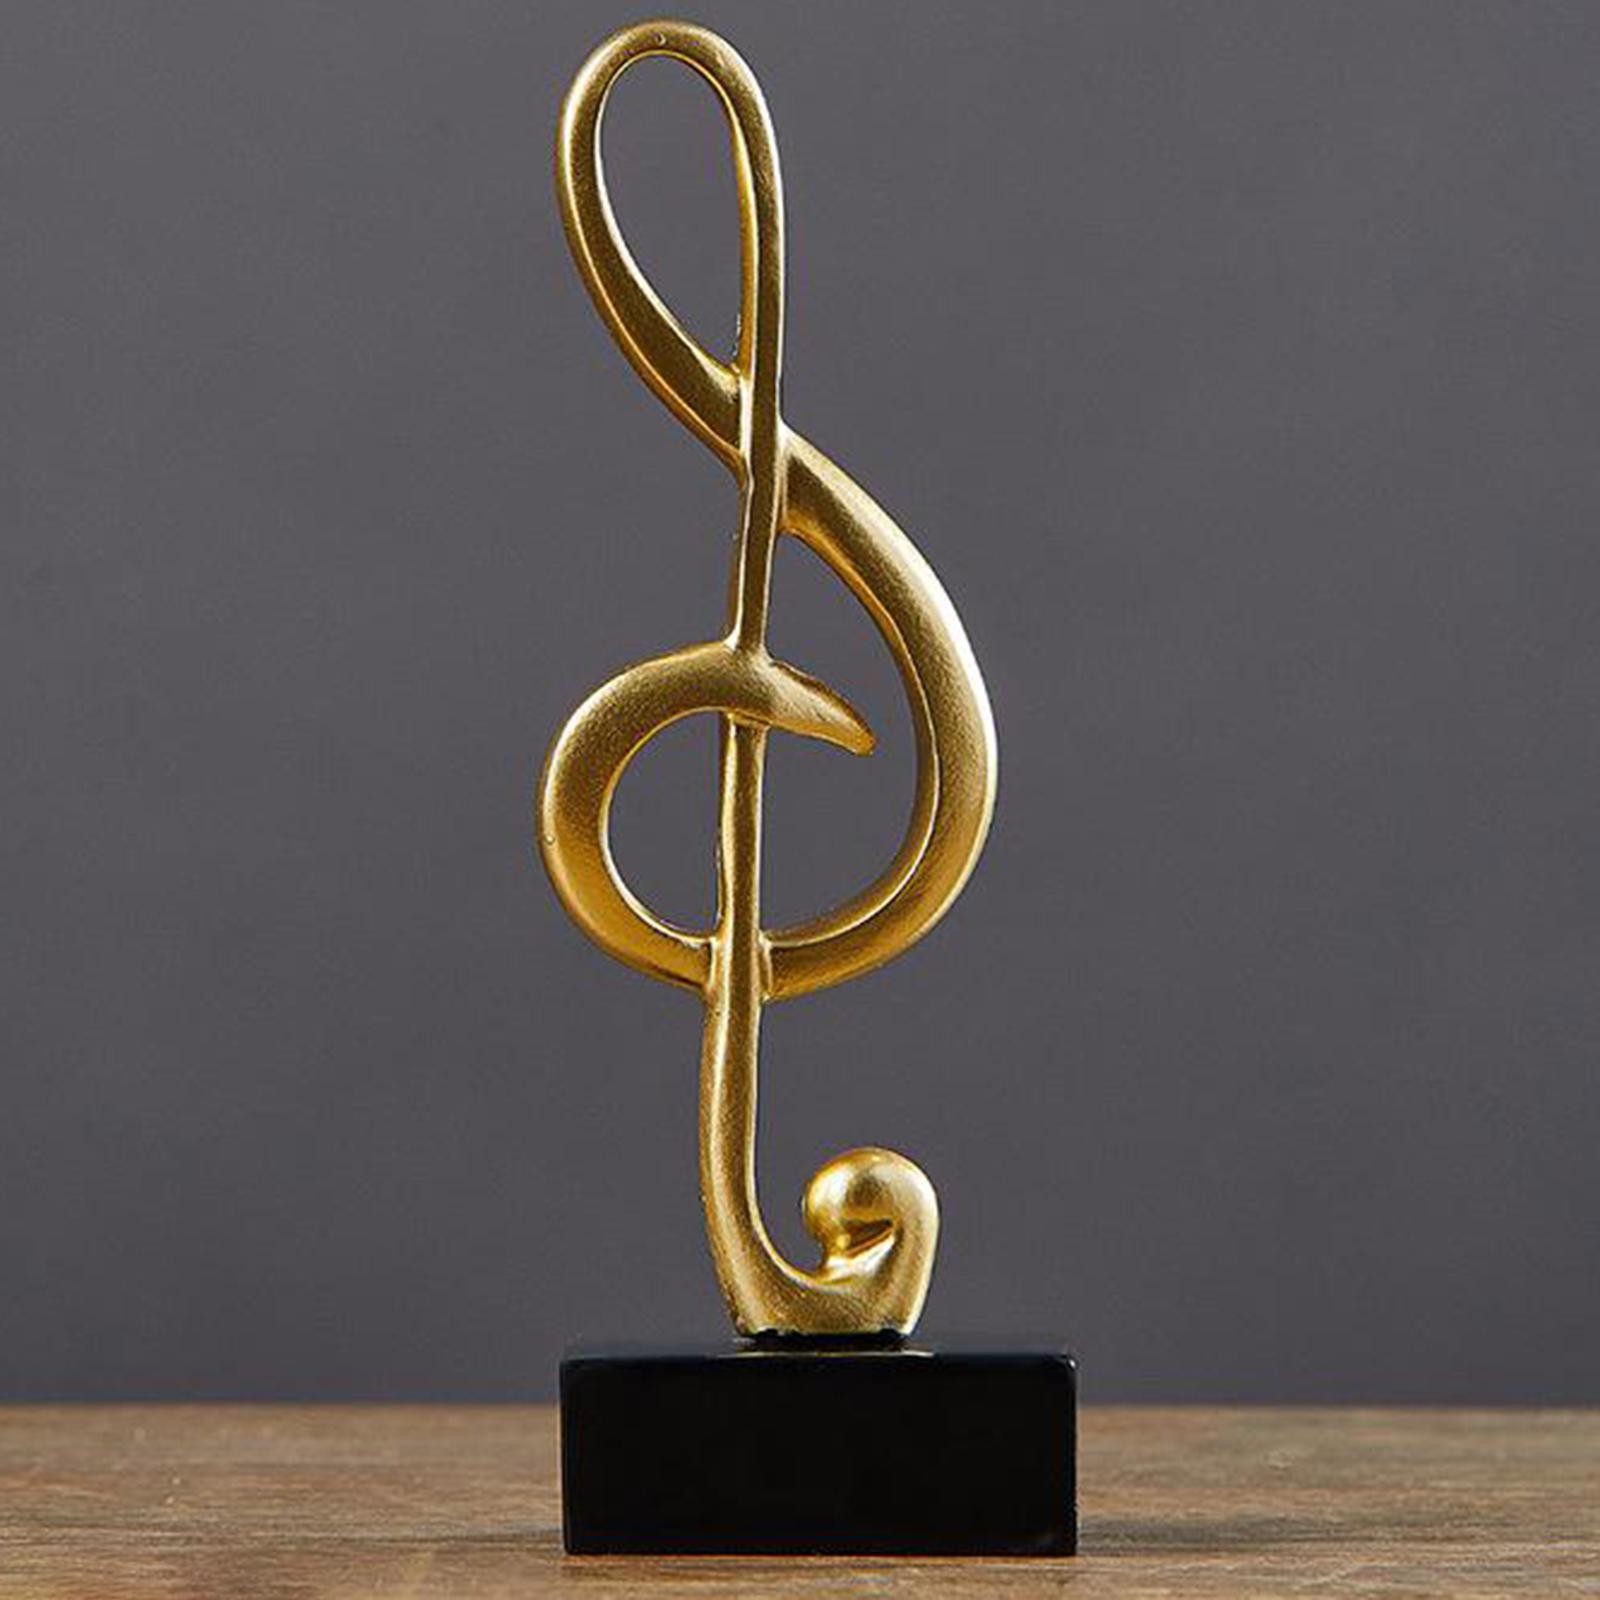 Music Sculpture Ornament Figurine Statue Photo Props Office Desktop Decor